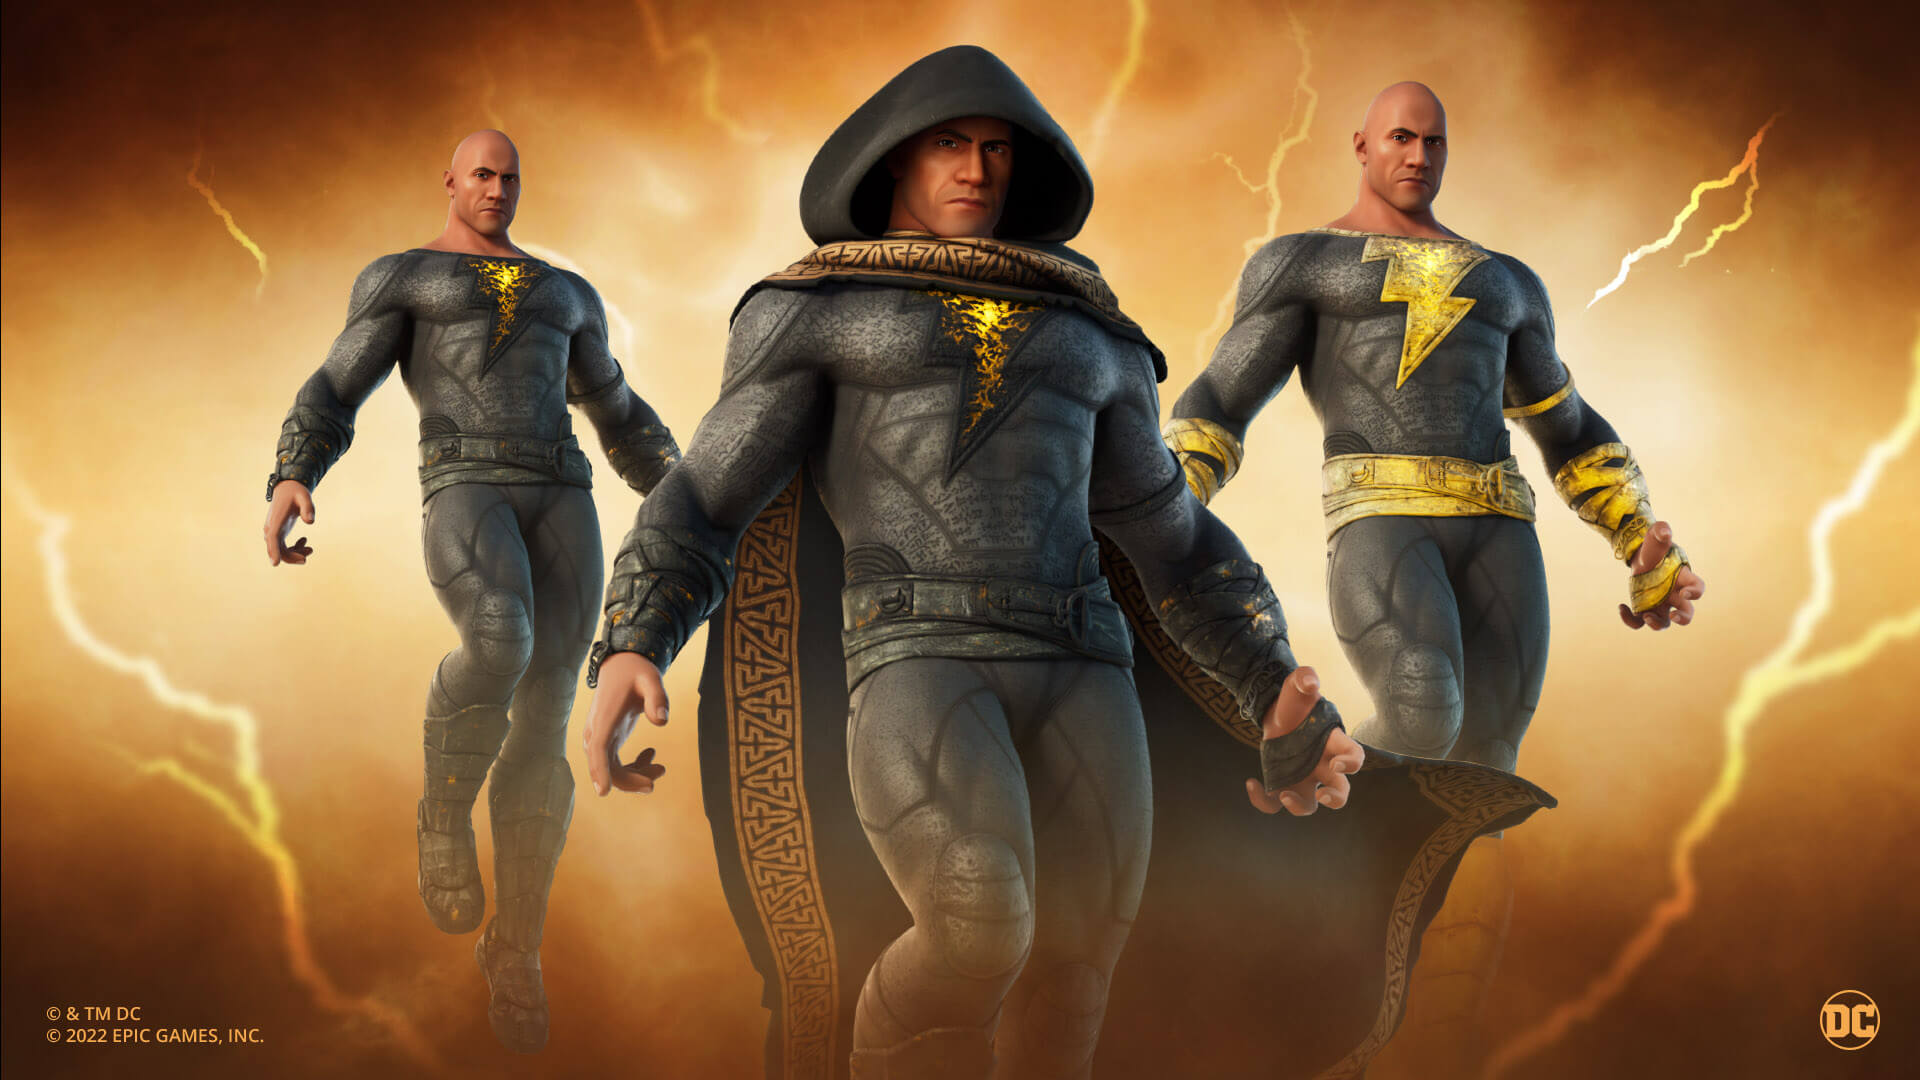 Fortnite x Black Adam Collaboration: DC’s Black Adam has come to wreak havoc in Fortnite Chapter 3 Season 4